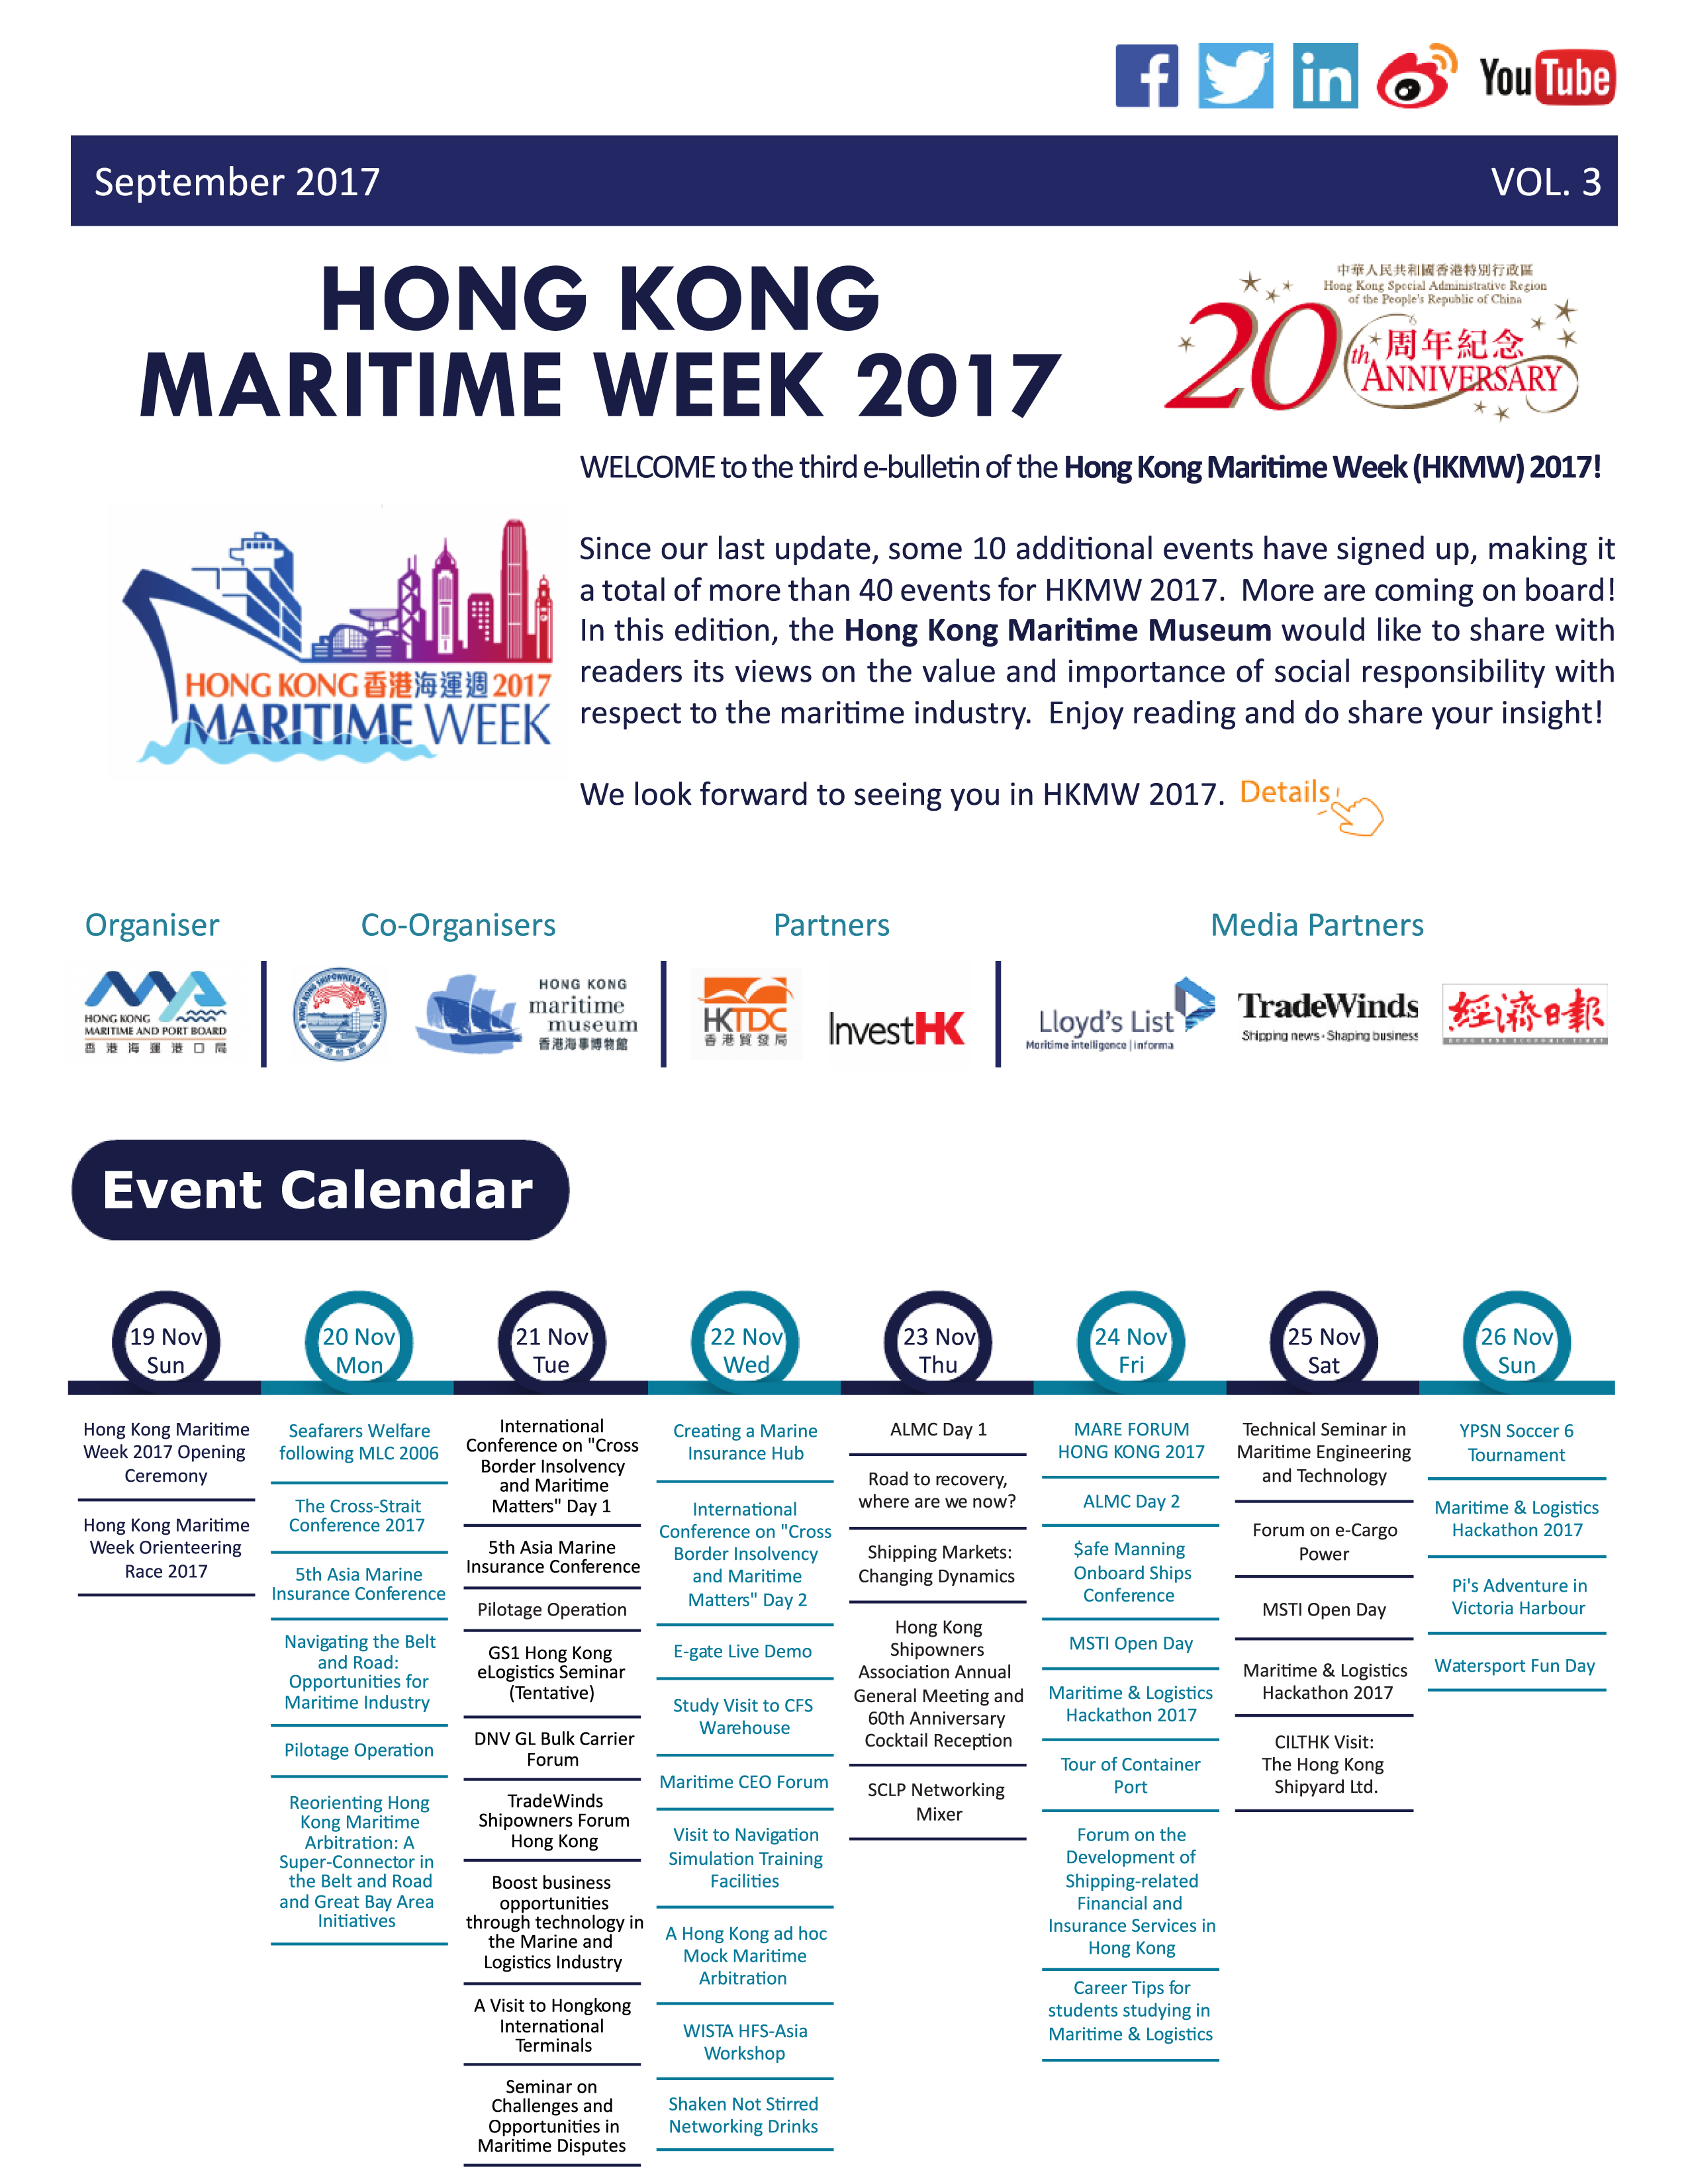 Hong Kong Maritime Week 2017 E-Bulletin No. 3